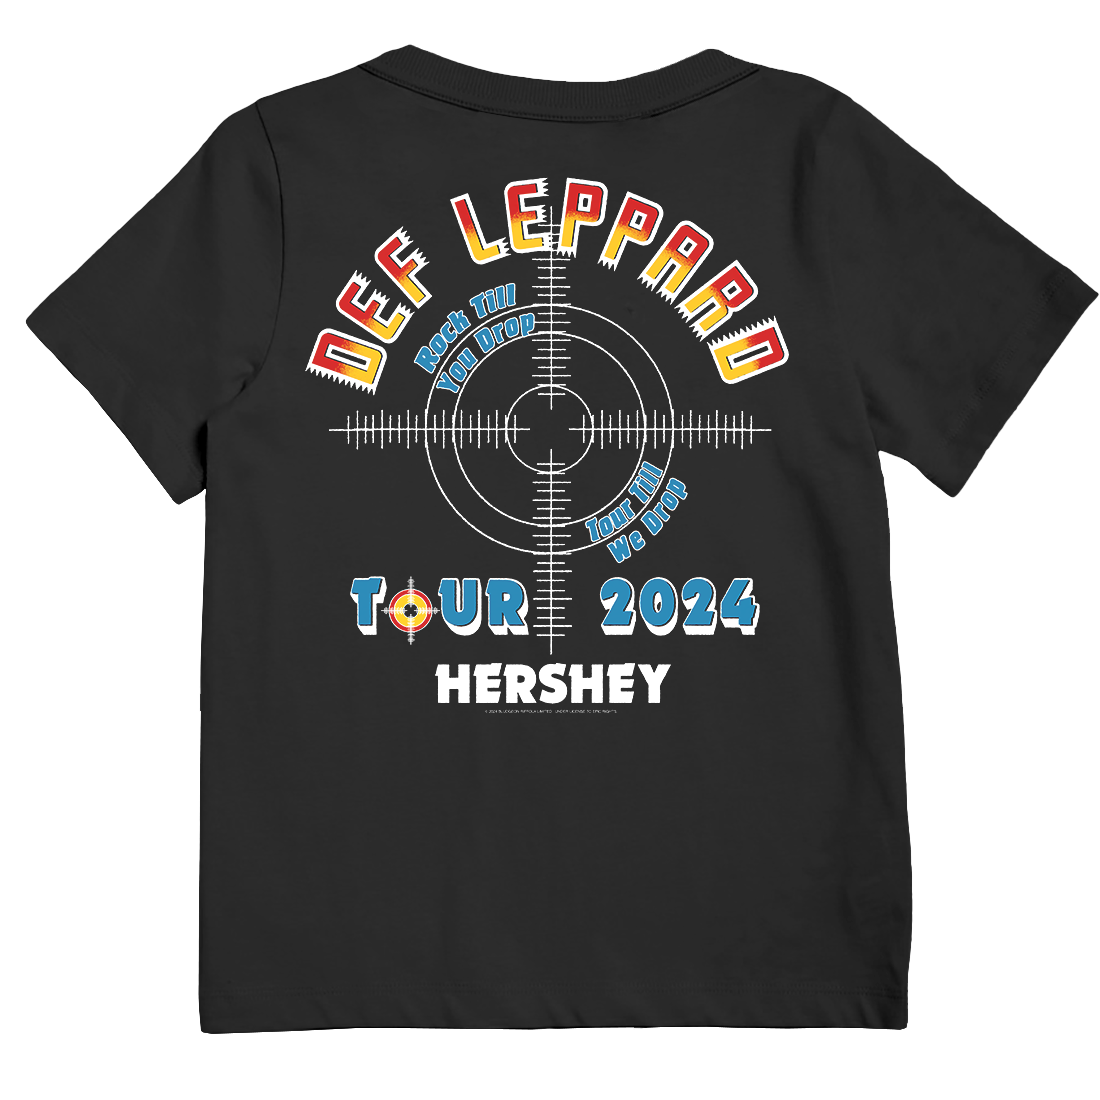 Hershey, PA 2024 Tour Kids T-Shirt Back